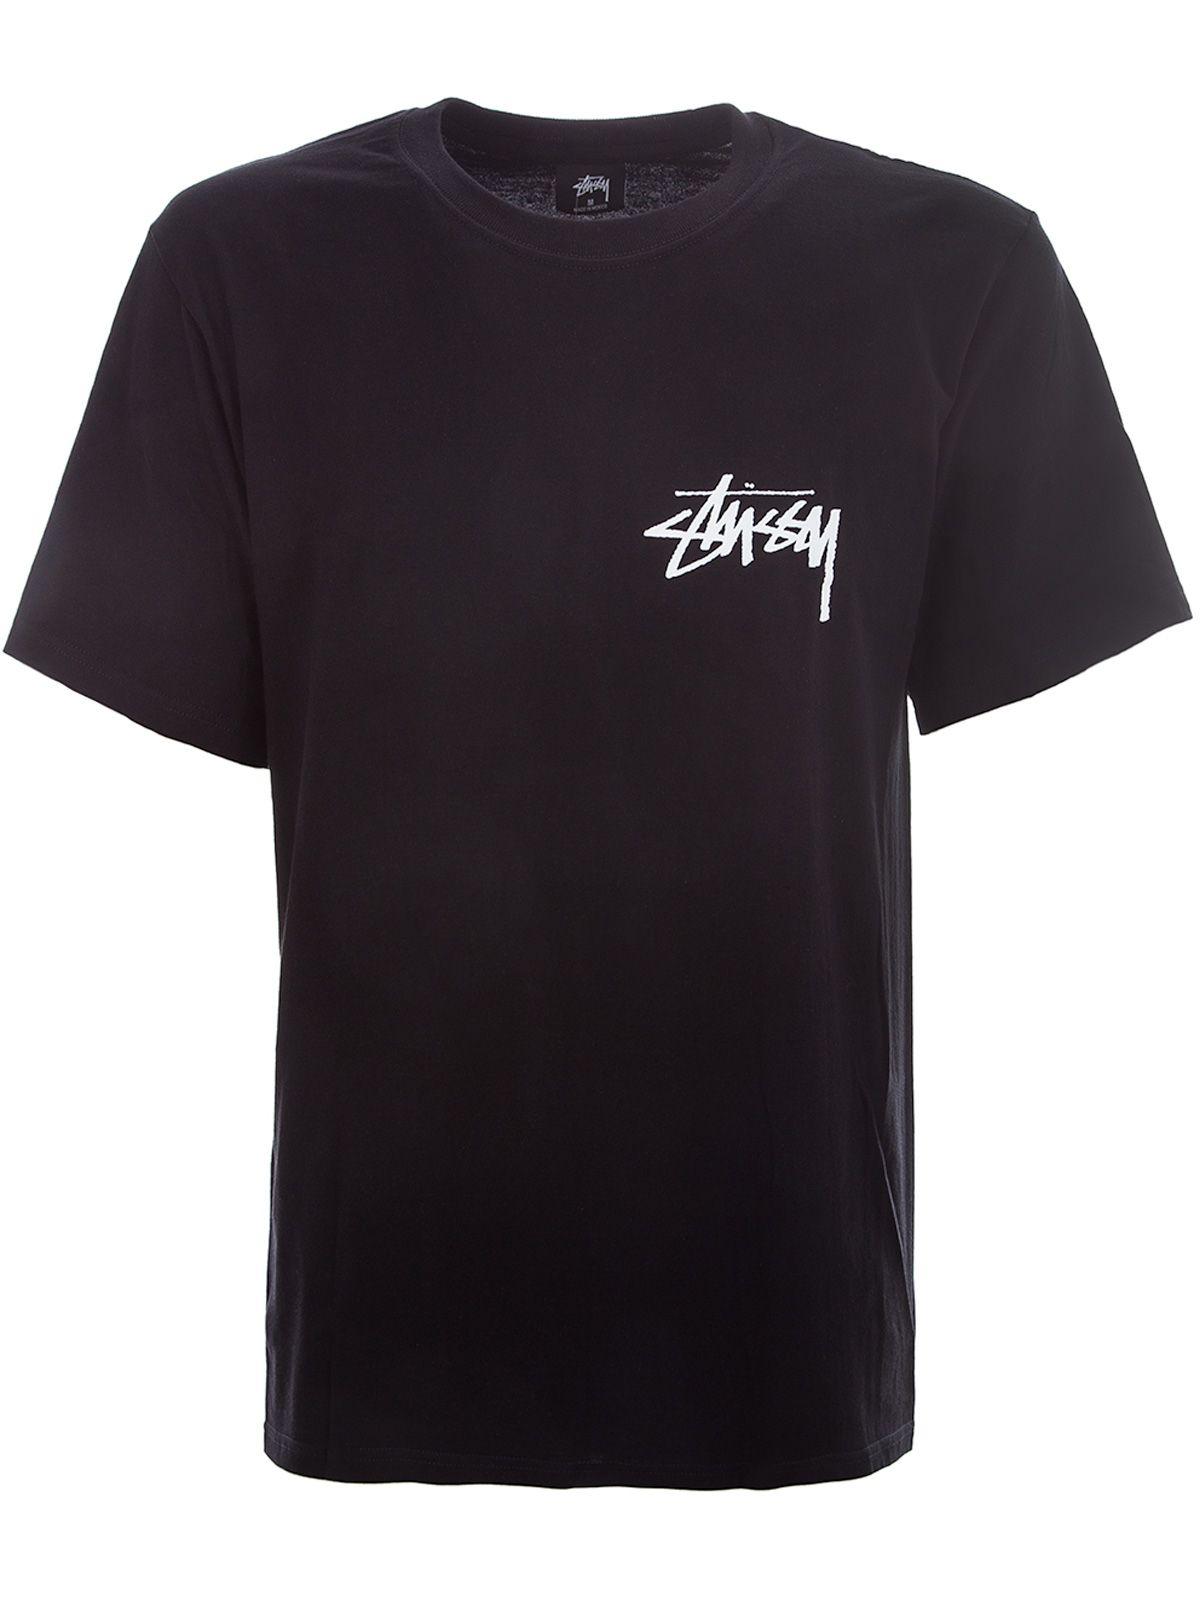 Stussy Black Cotton T-shirt in Black for Men - Lyst